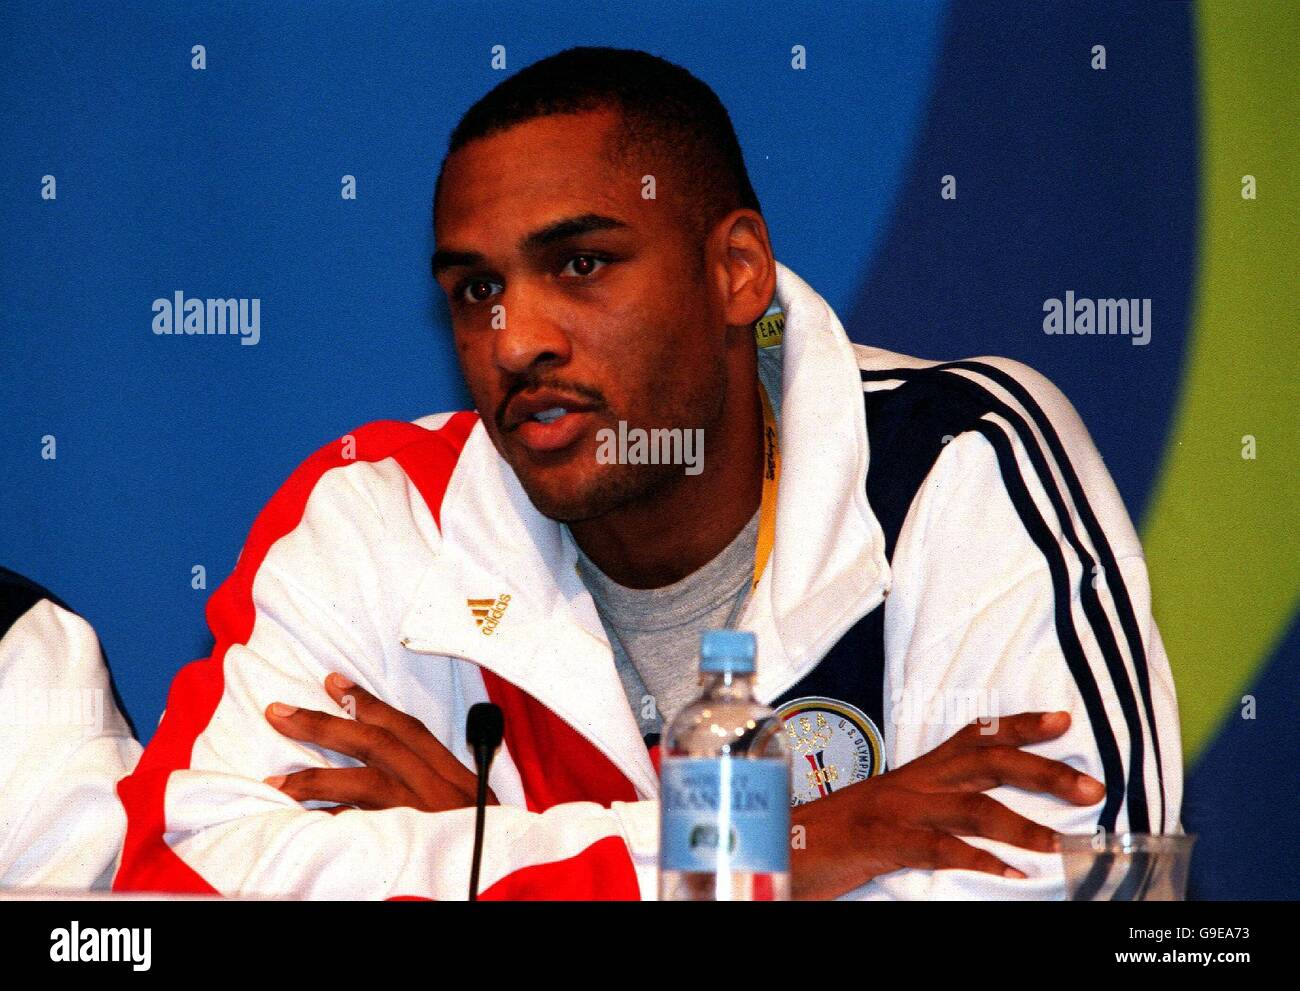 Basketball - Sydney 2000 Olympics - USA Press Conference Stock Photo